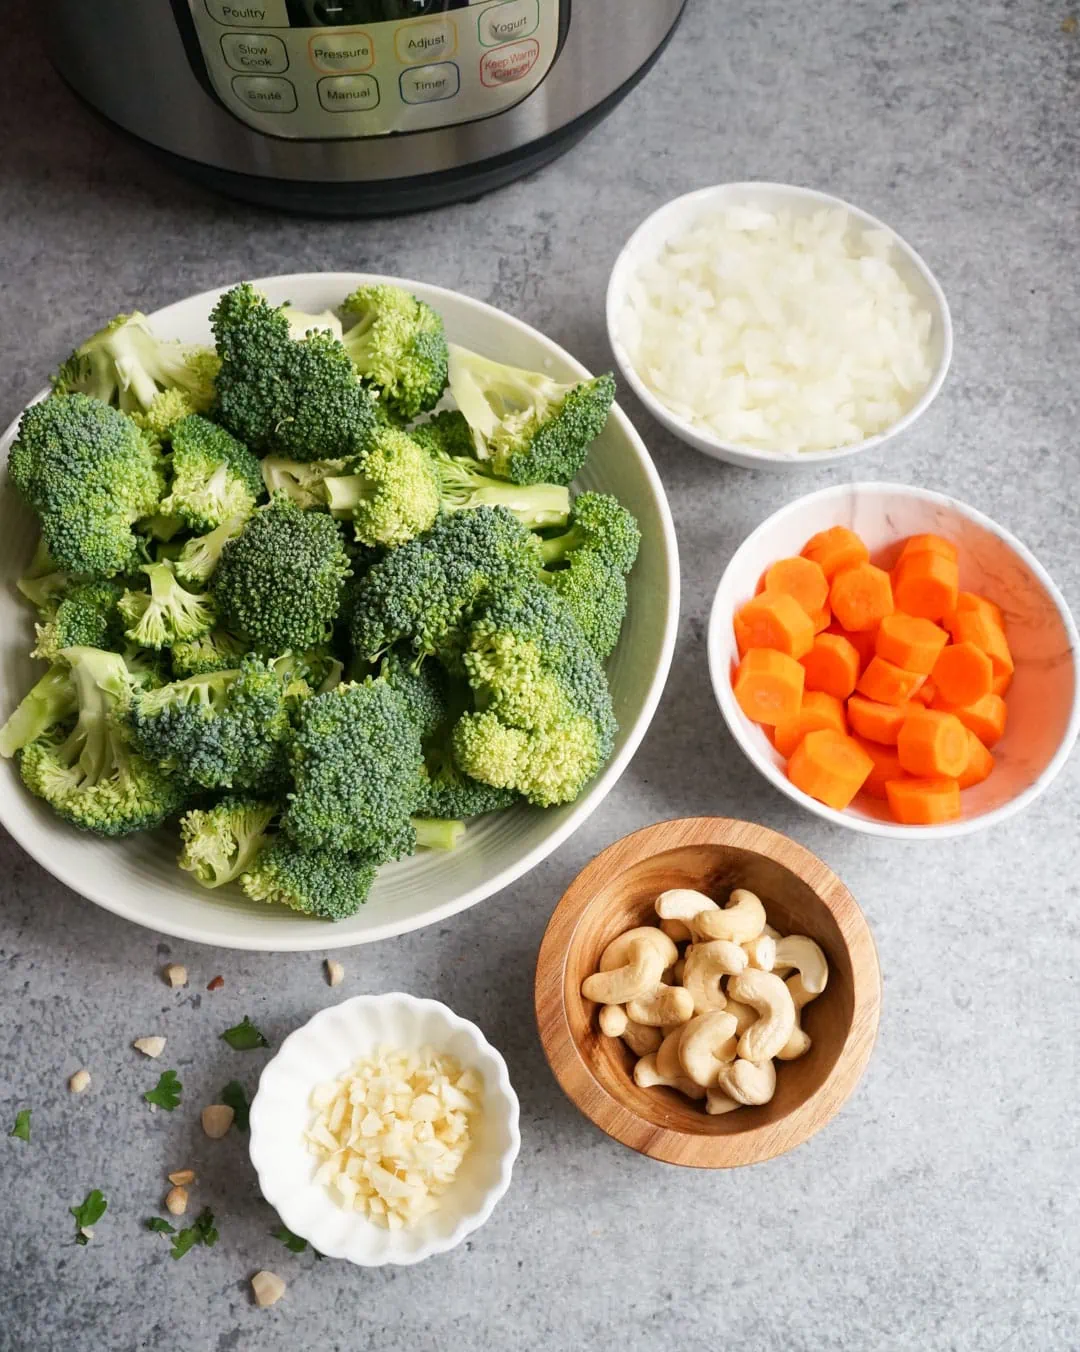 Ingredients for vegan cream of broccoli soup